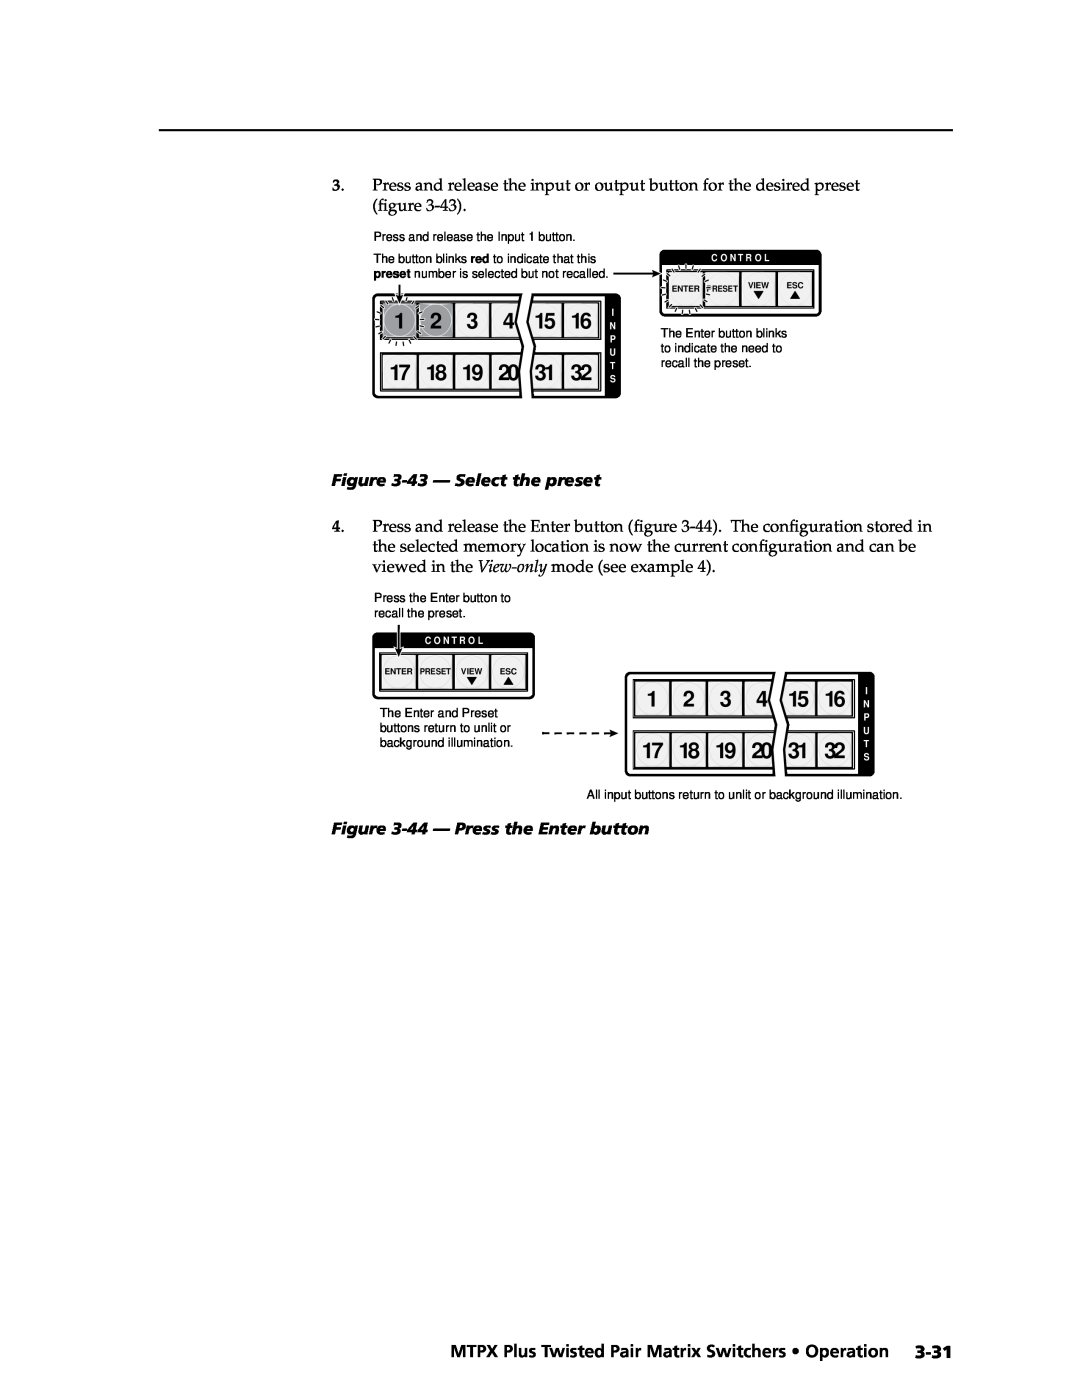 Extron electronic MTPX Plus Series manual 1 2 3 4 15, 43 - Select the preset, 44 - Press the Enter button 